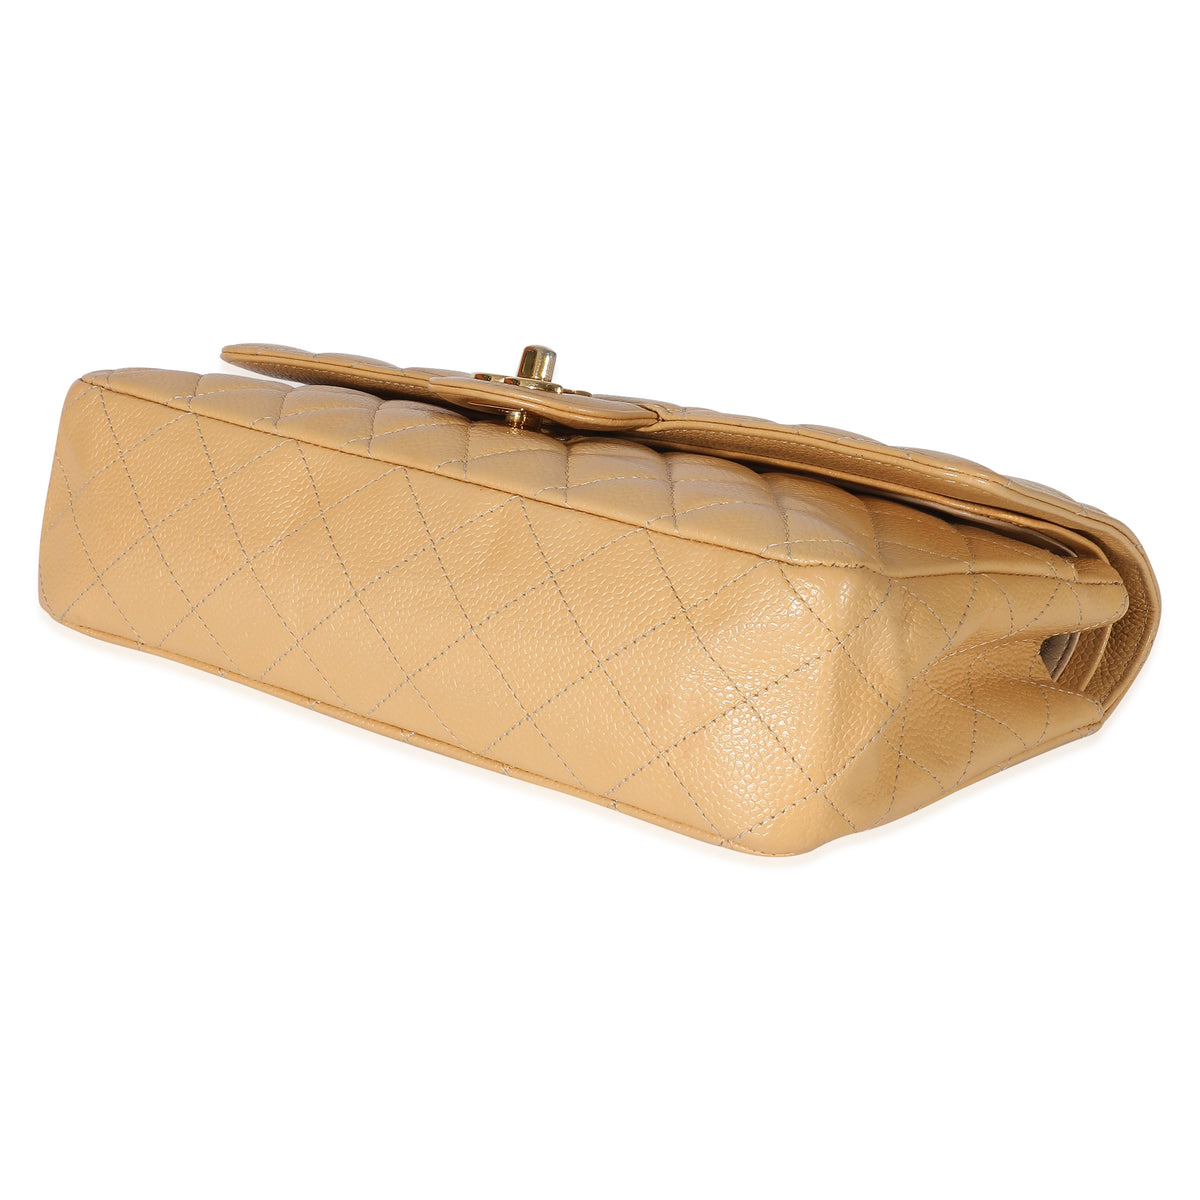 Chanel Beige Lambskin Medium Classic Flap Bag